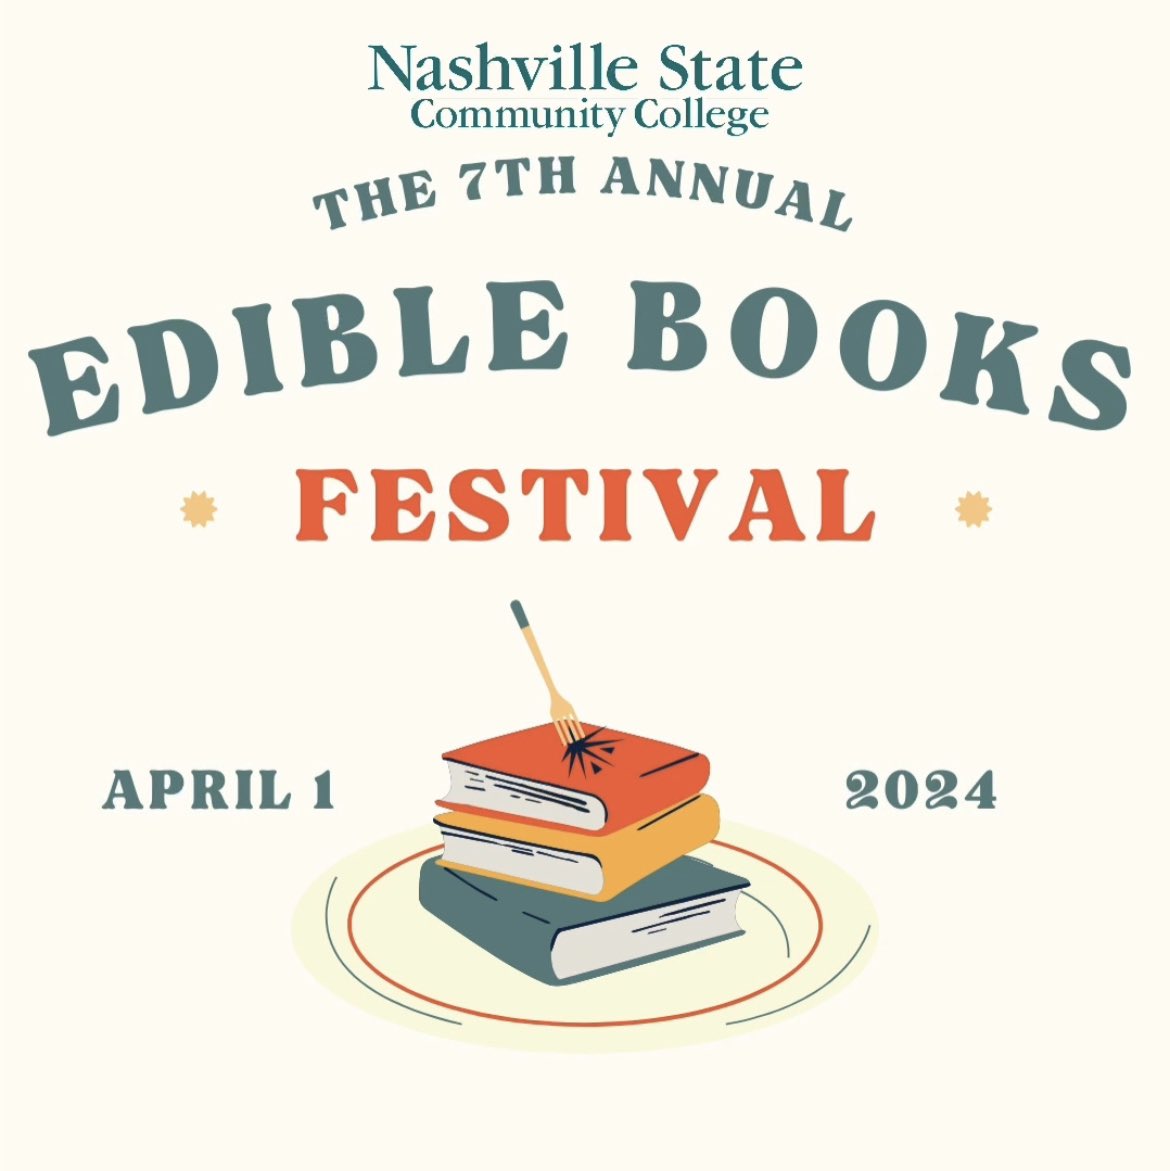 Join the Nashville State Library on April 1 for the annual Edible Books Festival! Details: facebook.com/share/kcvCG5g9… #NashvilleState